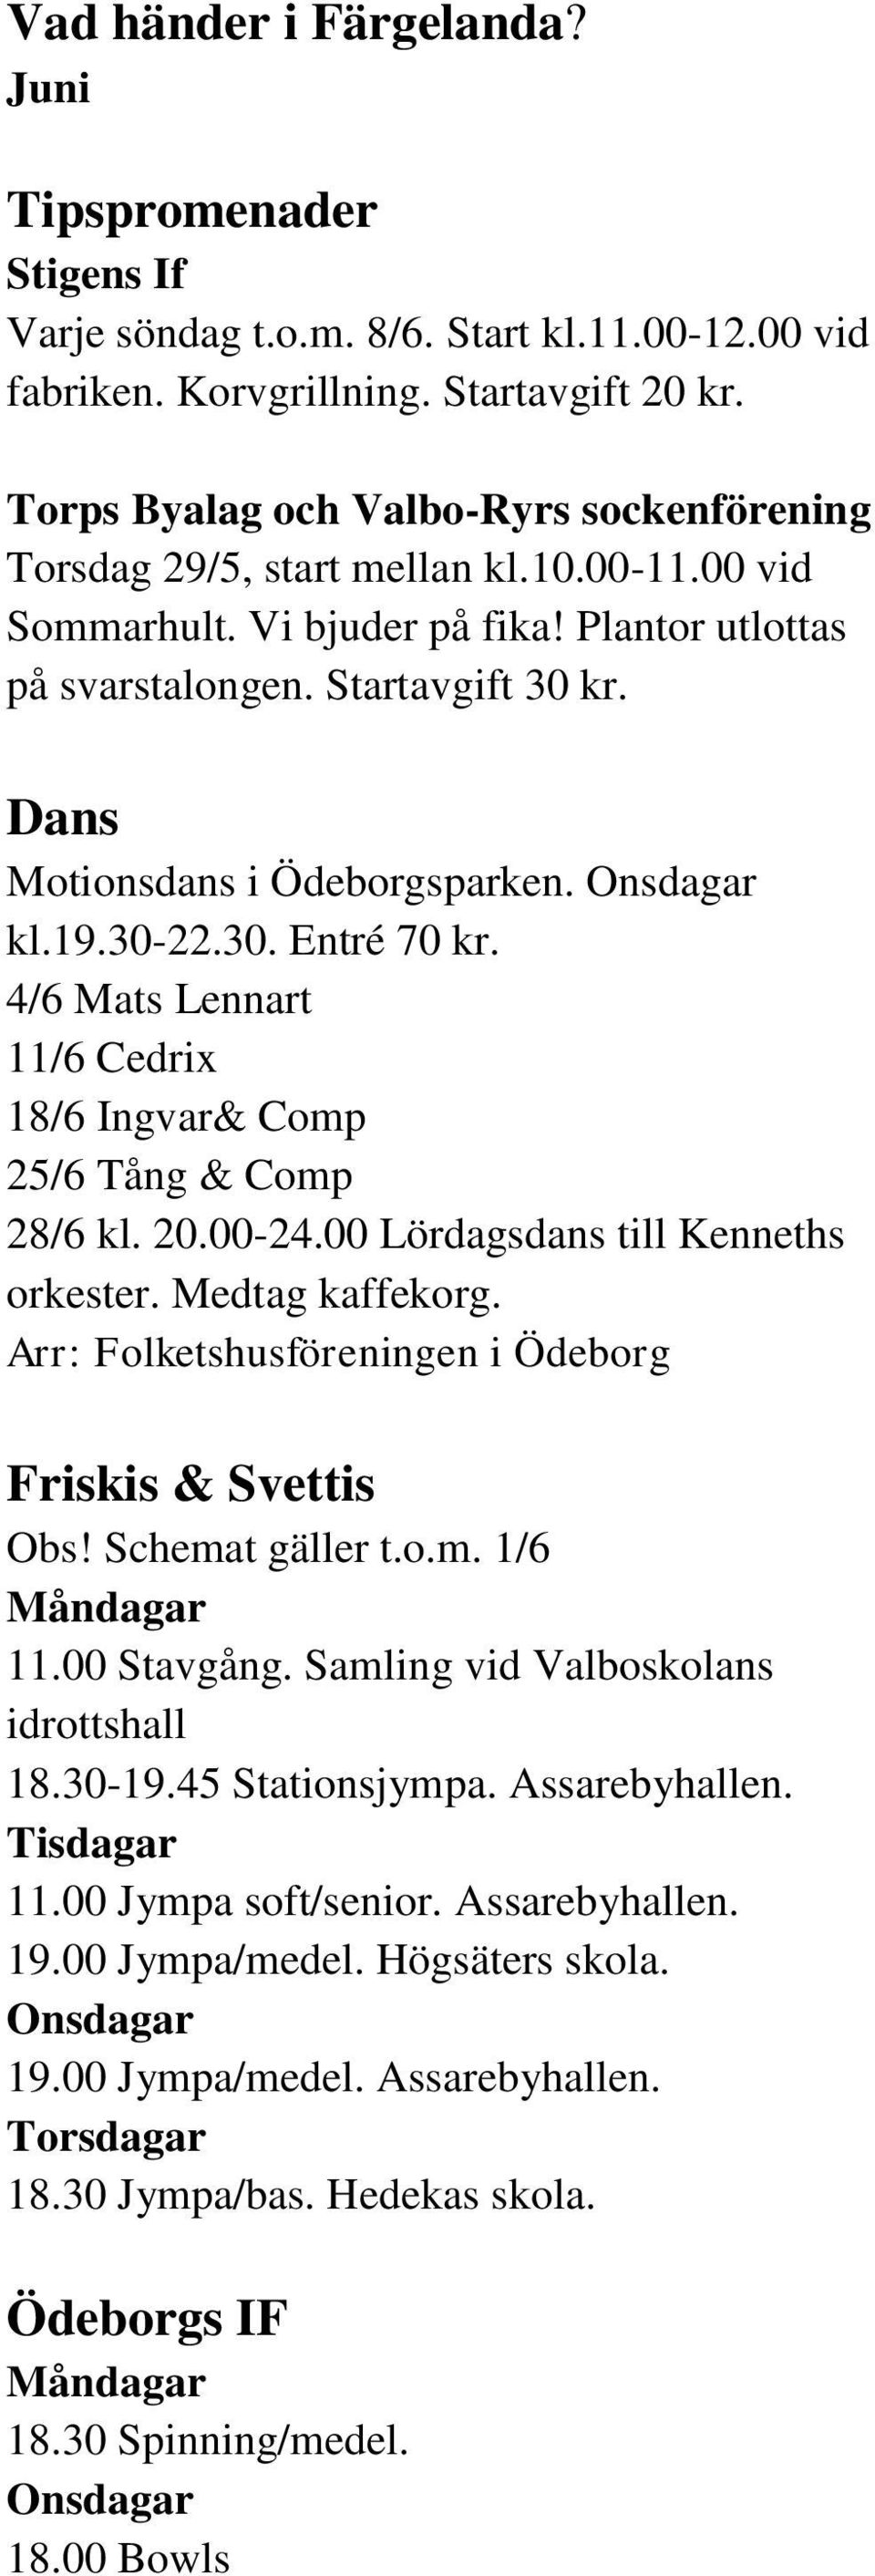 Dans Motionsdans i Ödeborgsparken. Onsdagar kl.19.30-22.30. Entré 70 kr. 4/6 Mats Lennart 11/6 Cedrix 18/6 Ingvar& Comp 25/6 Tång & Comp 28/6 kl. 20.00-24.00 Lördagsdans till Kenneths orkester.